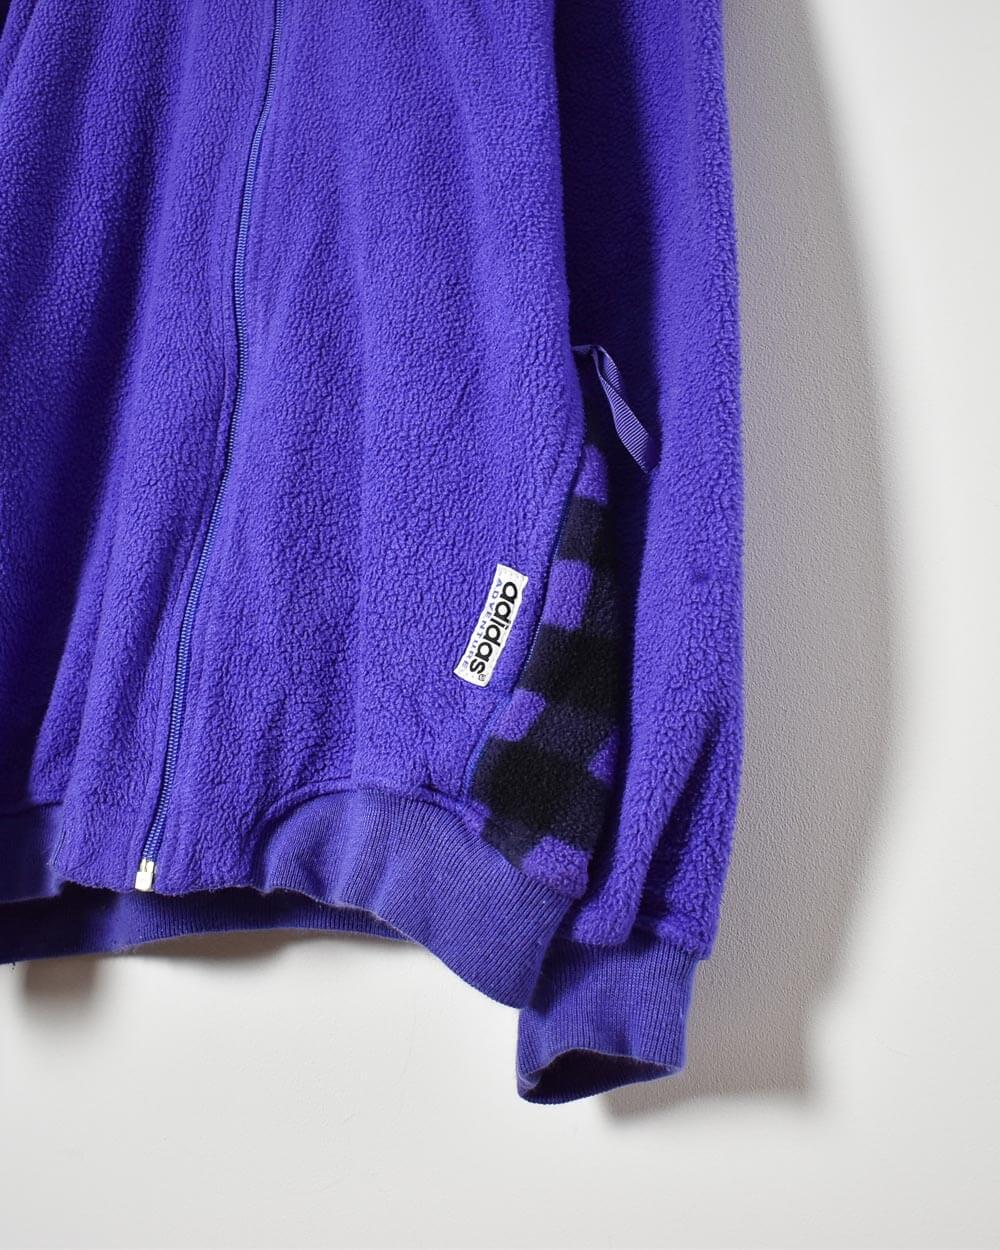 Purple Adidas Adventure Zip-Through Fleece - Medium